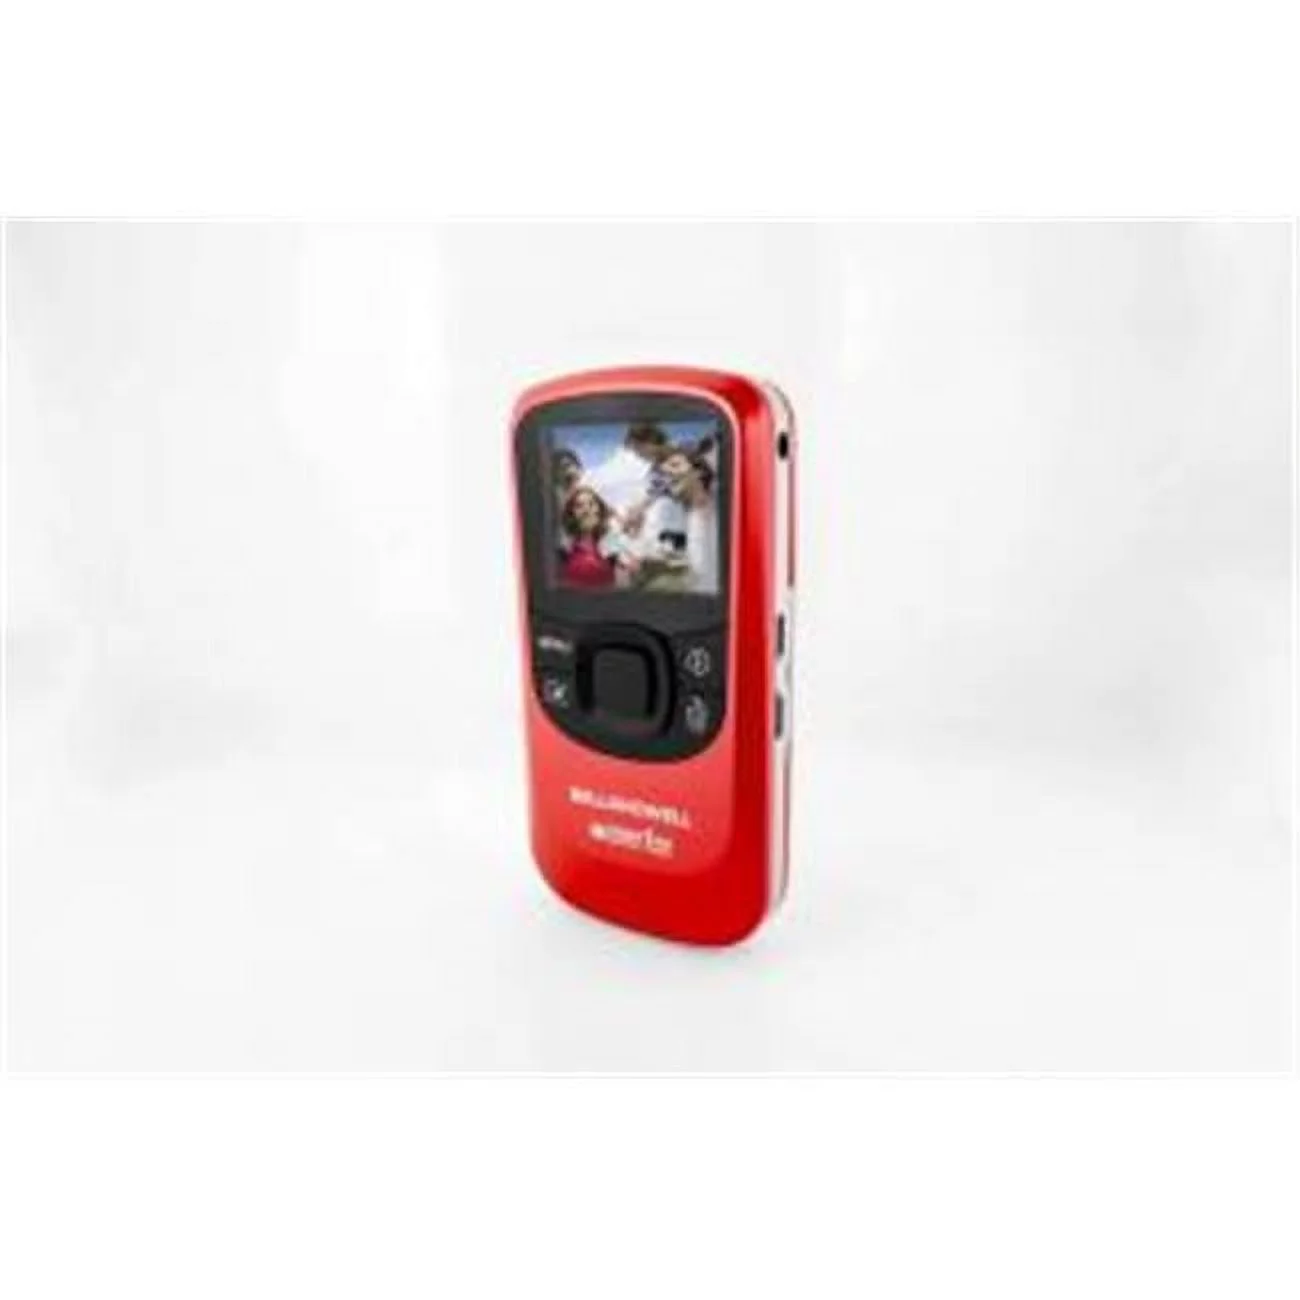 Bellhowell  Take HD Digital Video Camcorder - Red